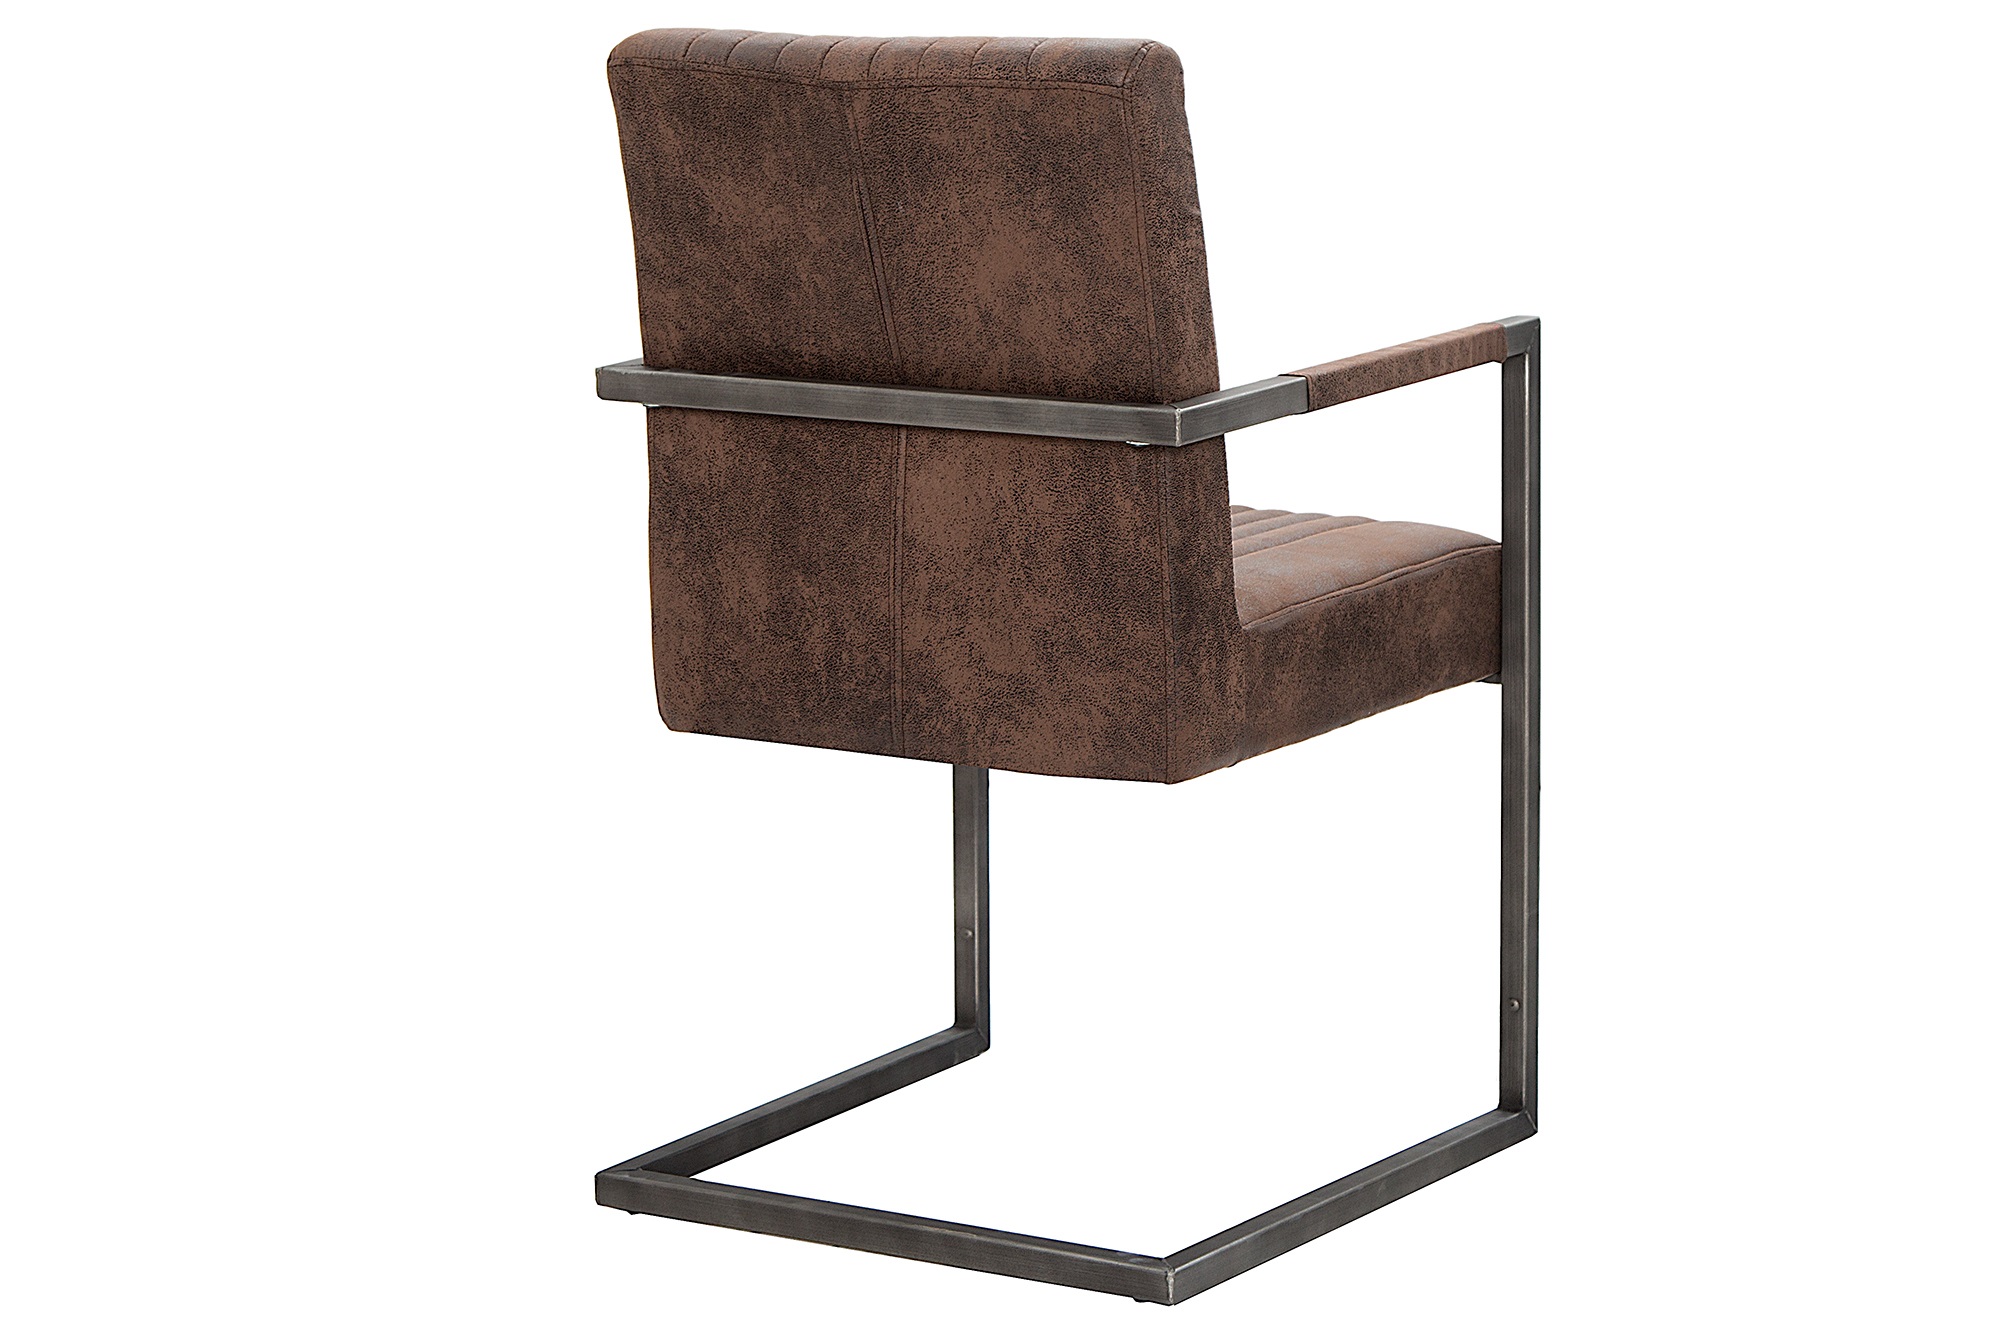 vrijdragende stoel vintage bruin